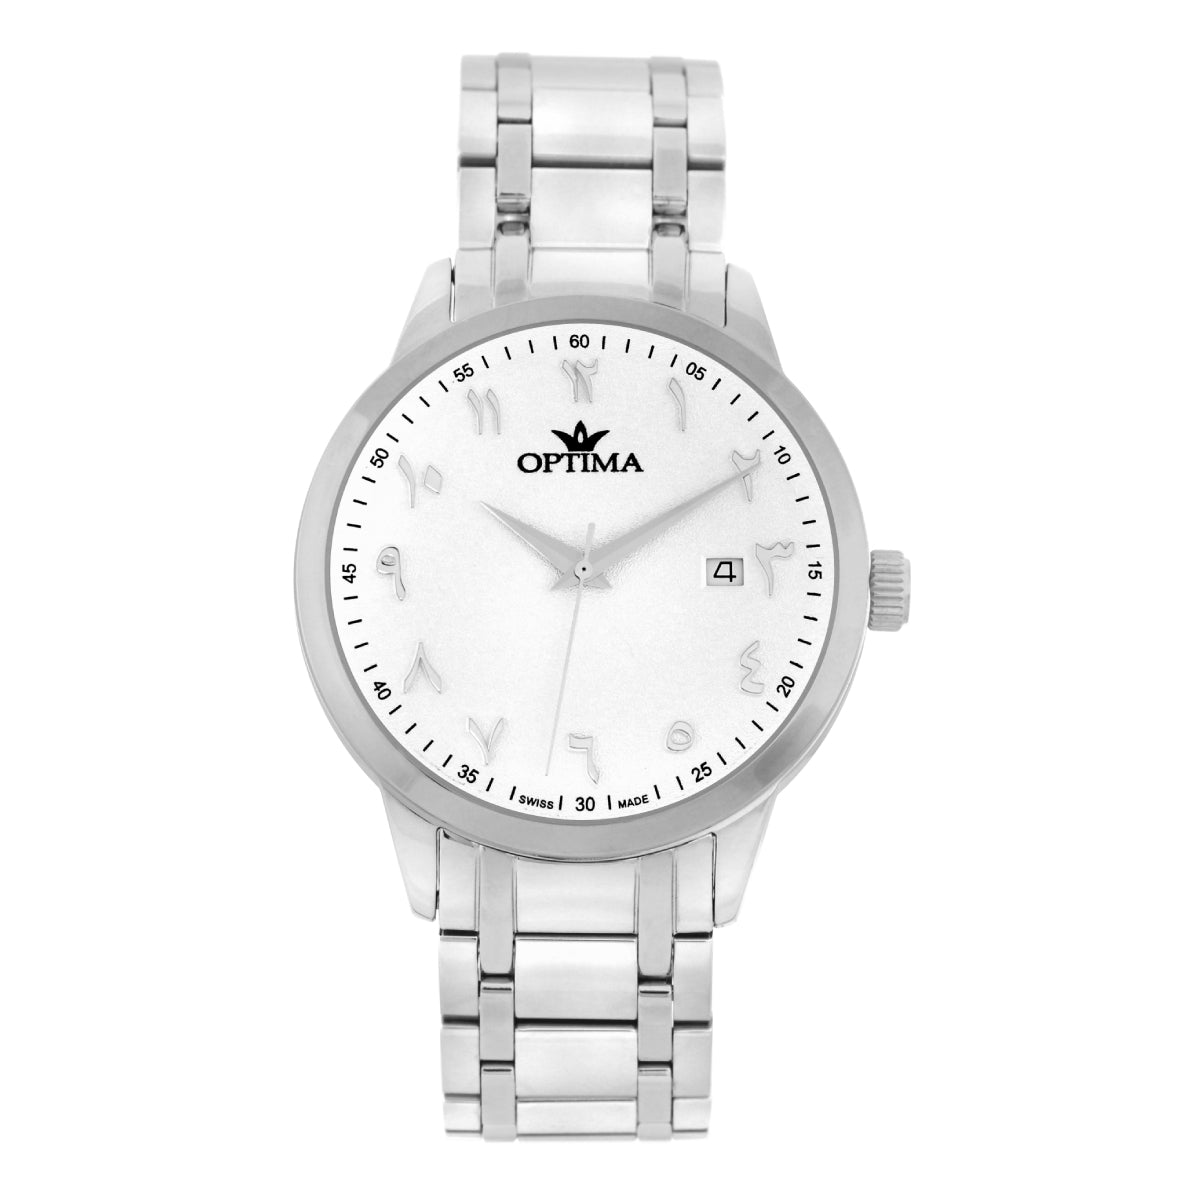 Optima Men's Swiss Quartz Watch with White Dial - OPT-0053